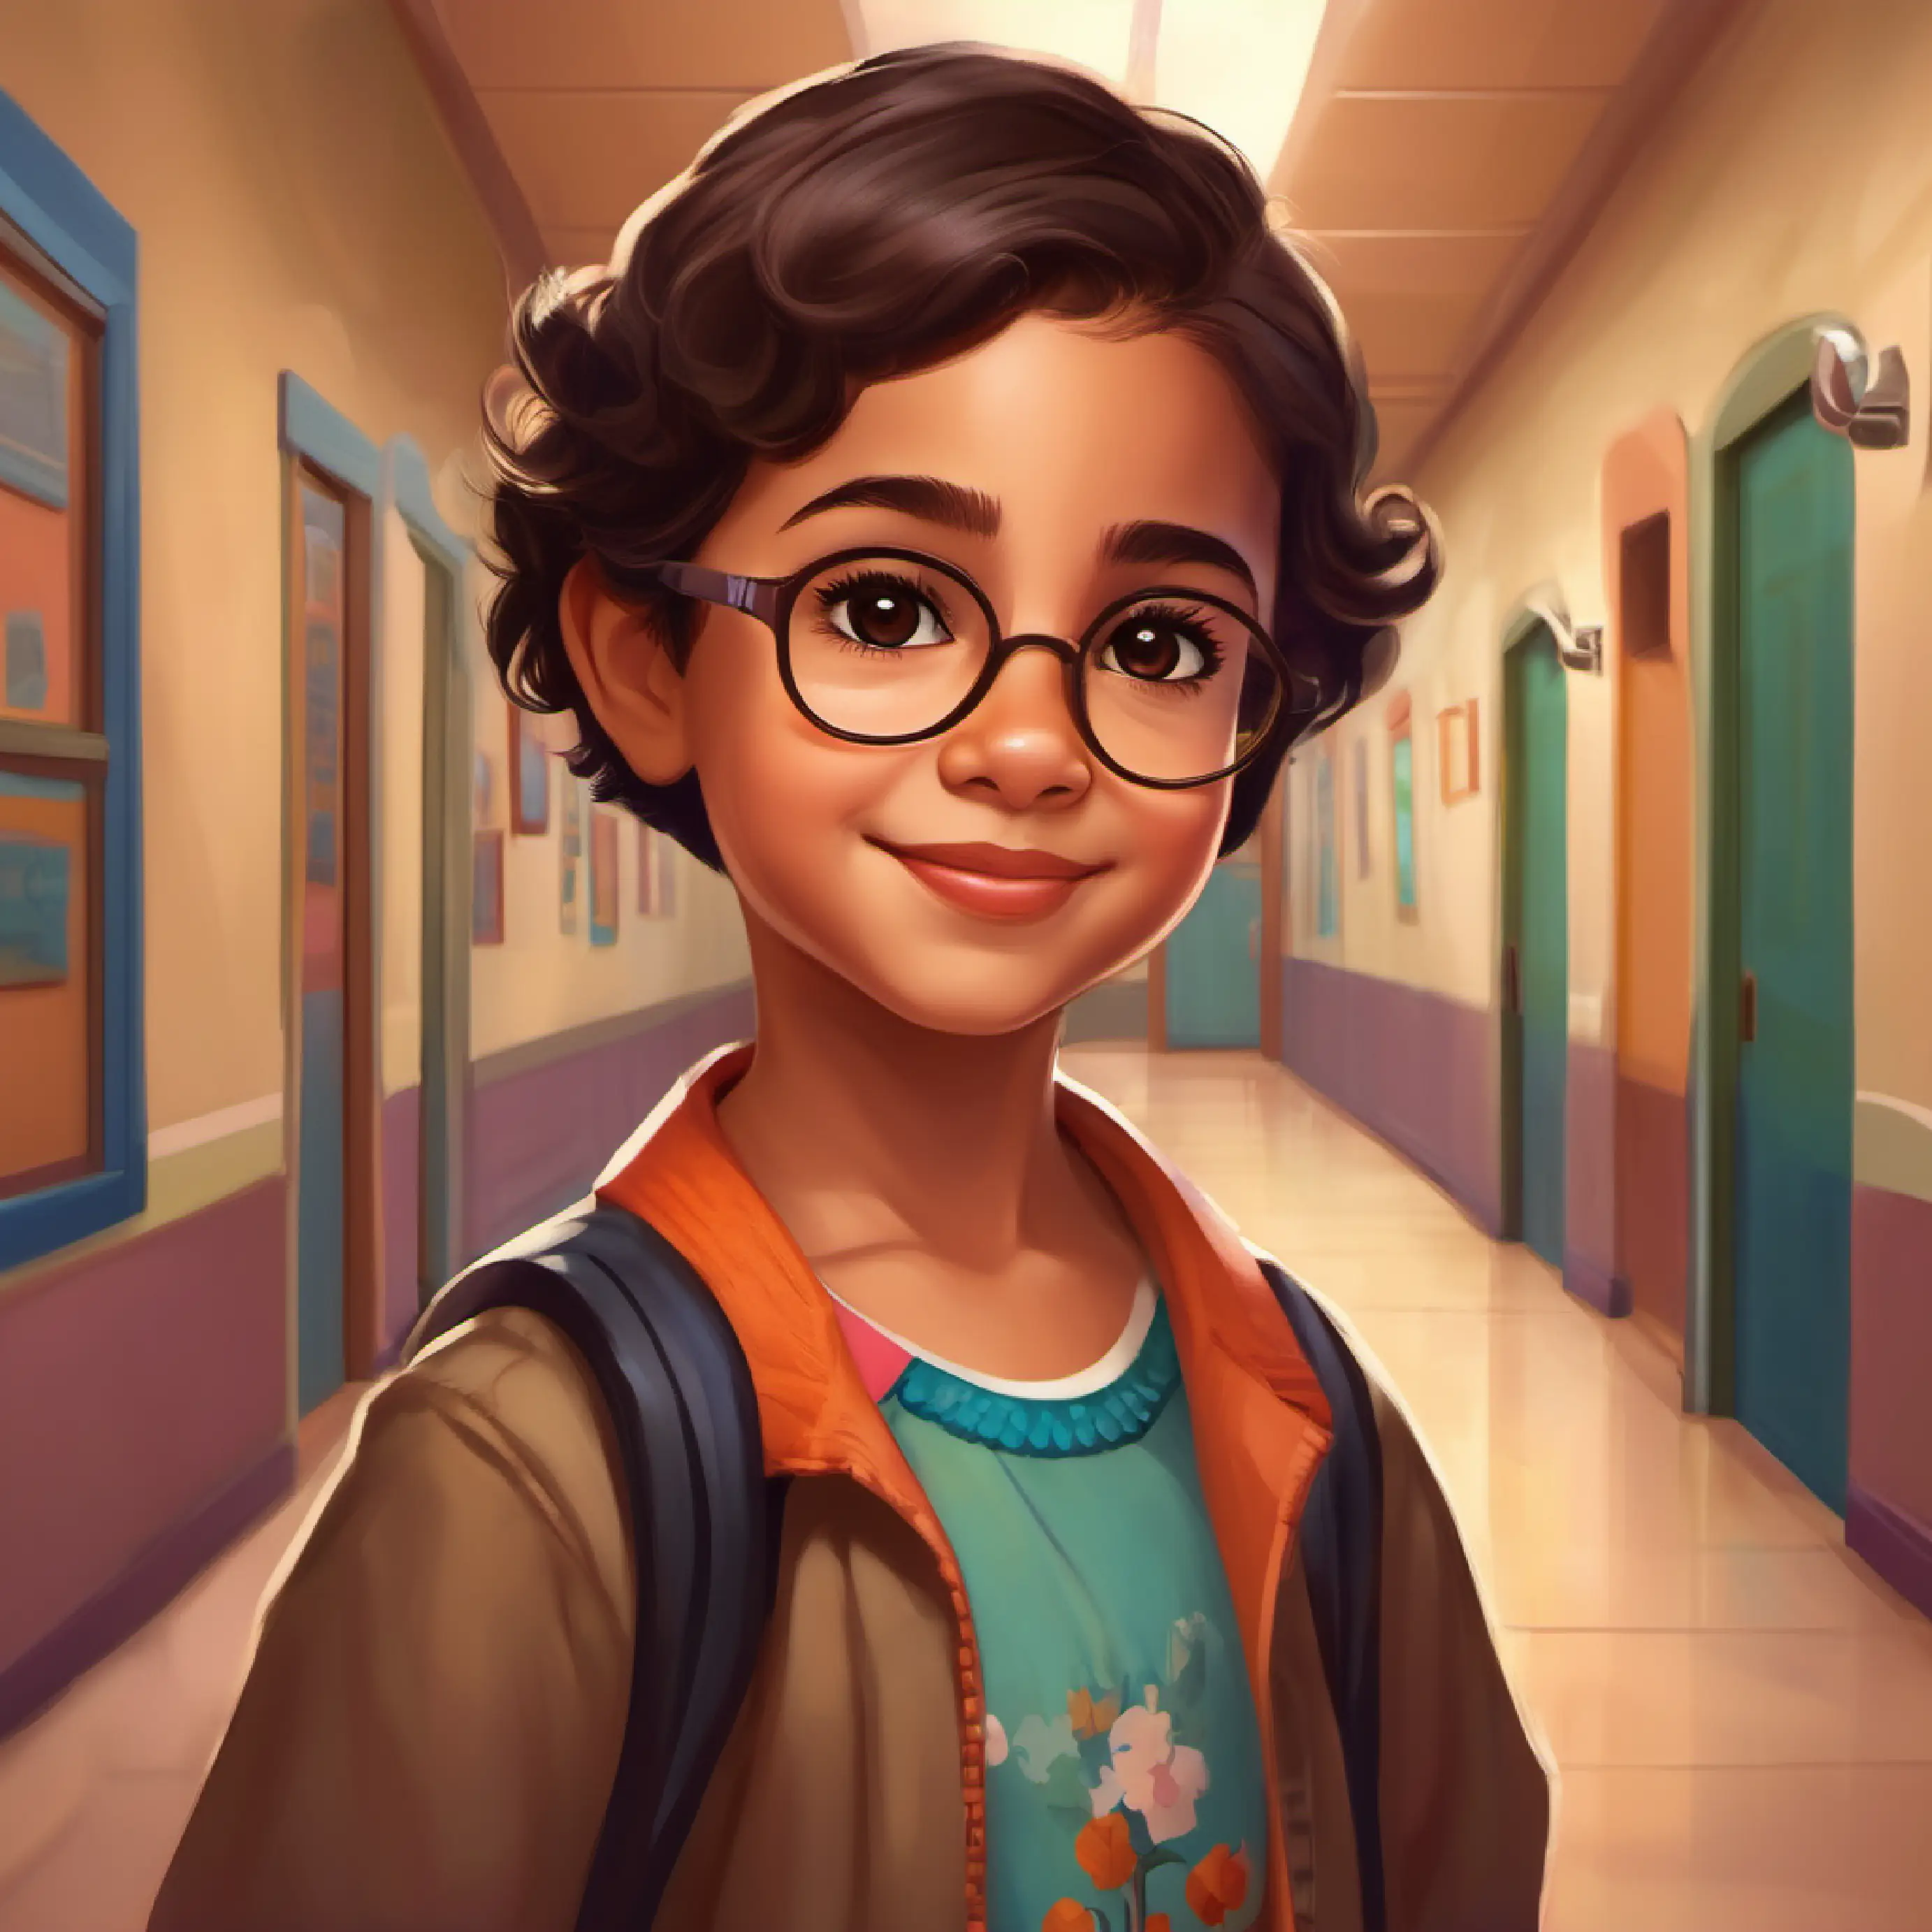 Nayeli in the hallway of her school, wearing her glasses